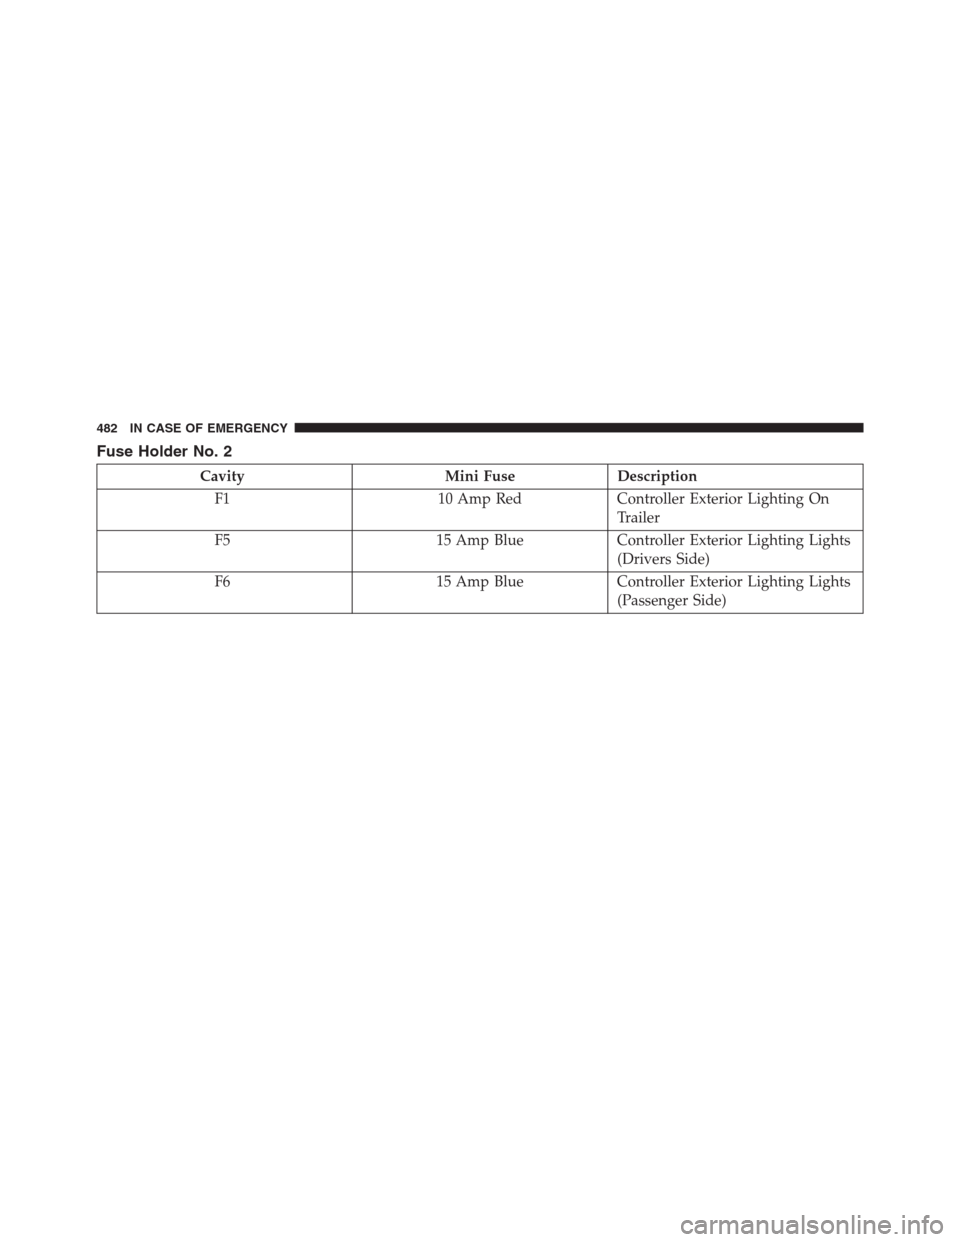 JEEP RENEGADE 2016 1.G Service Manual Fuse Holder No. 2
Cavity Mini Fuse Description
F1 10 Amp Red Controller Exterior Lighting On
Trailer
F5 15 Amp Blue Controller Exterior Lighting Lights
(Drivers Side)
F6 15 Amp Blue Controller Exterio